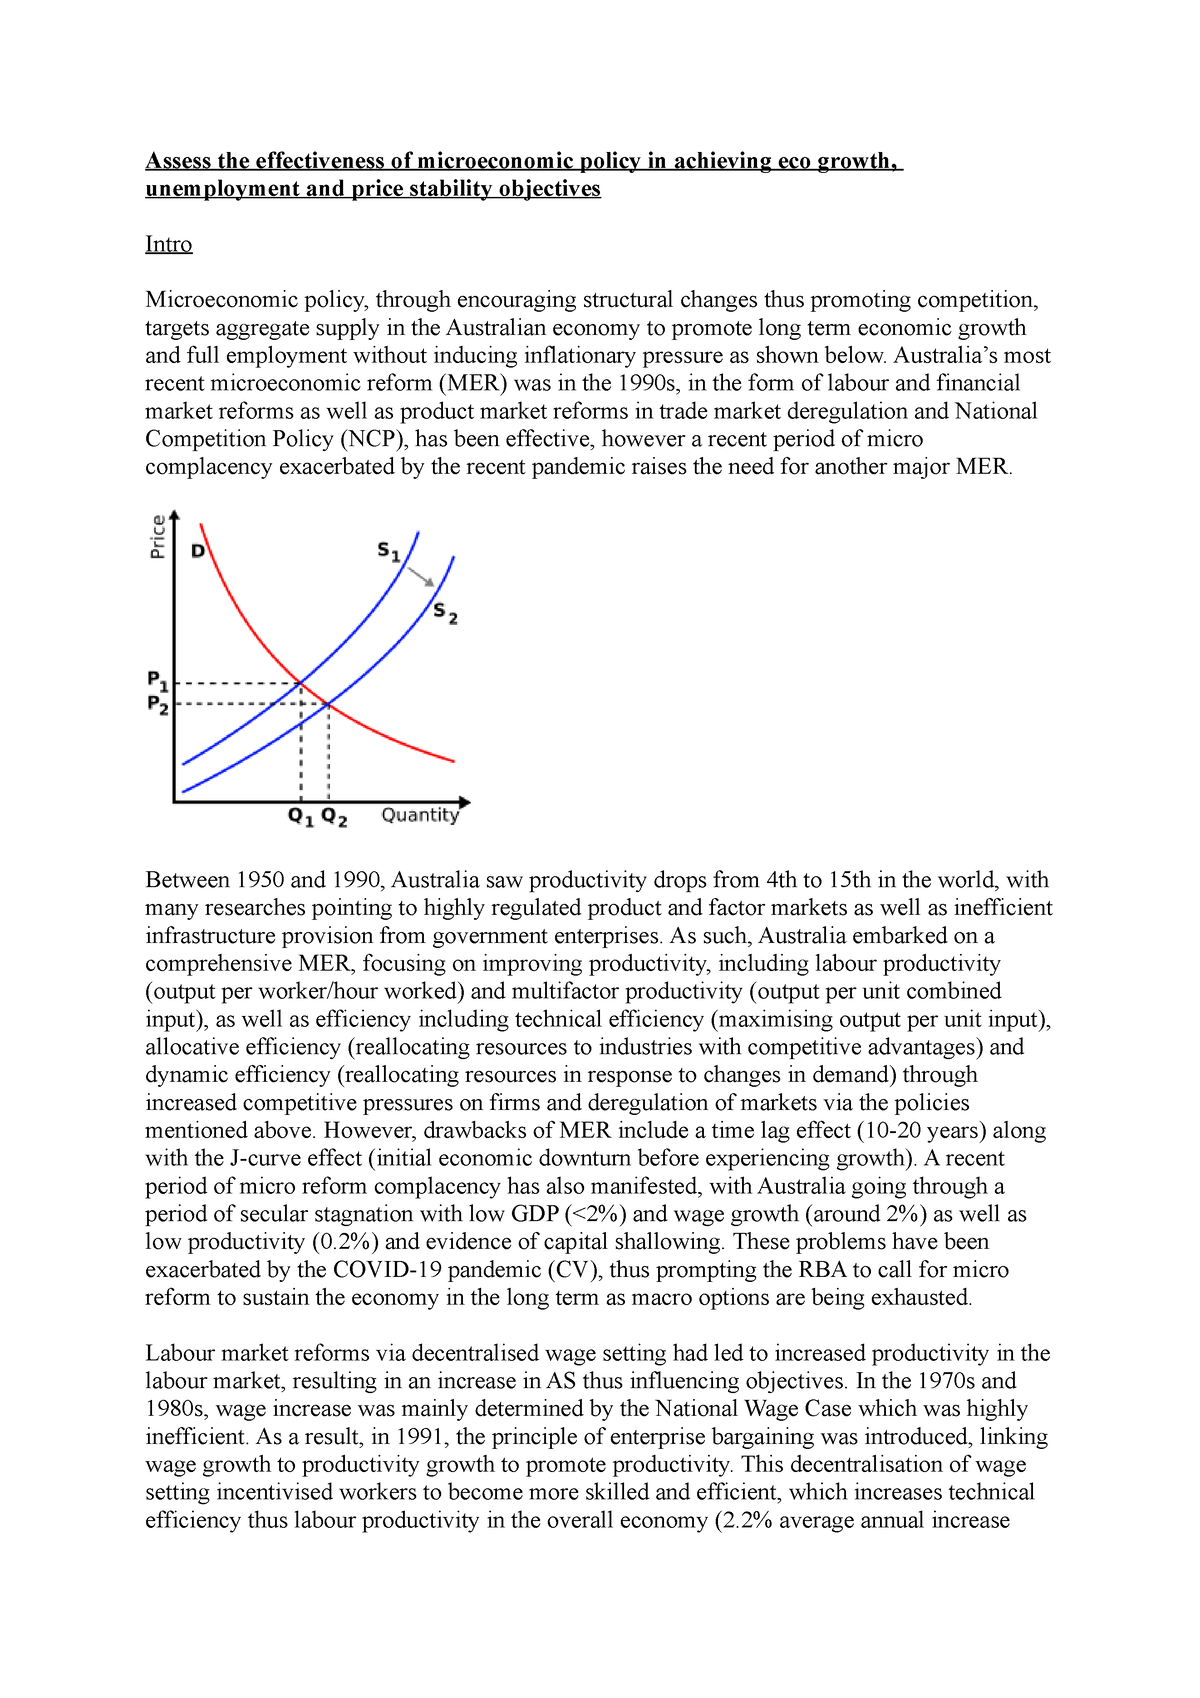 conclusion on microeconomics essay